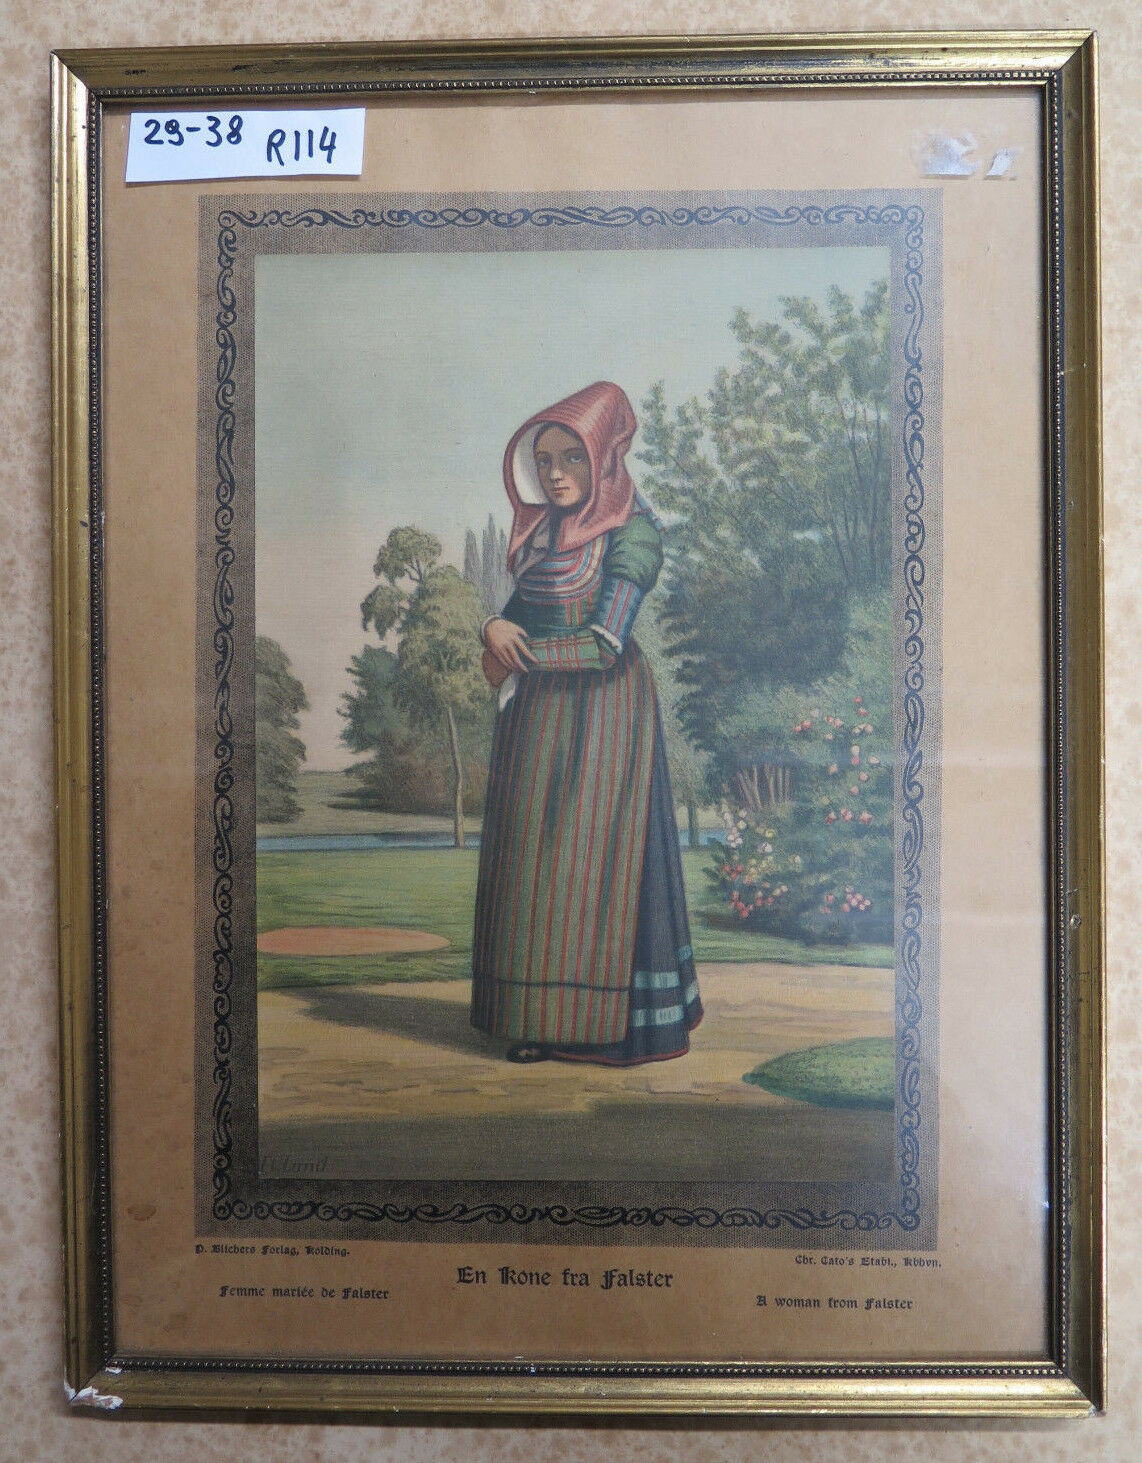 ANTIQUE COLOR PRINT WOMAN IN FALSTER CLOTHES DENMARK DENMARK 1900 R114